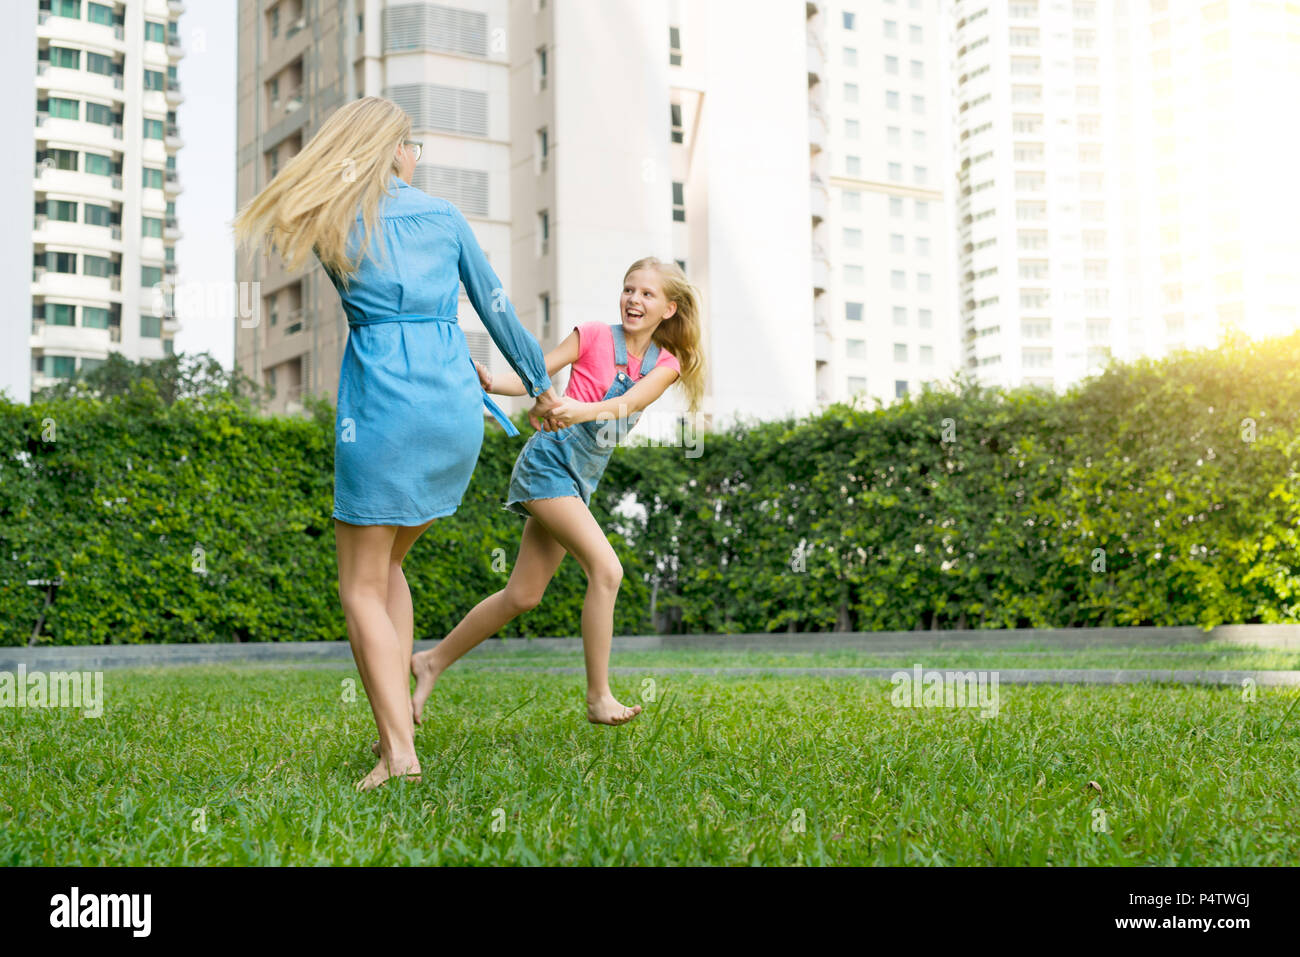 Happy mother and daughter having fun in urban city garden Stock Photo